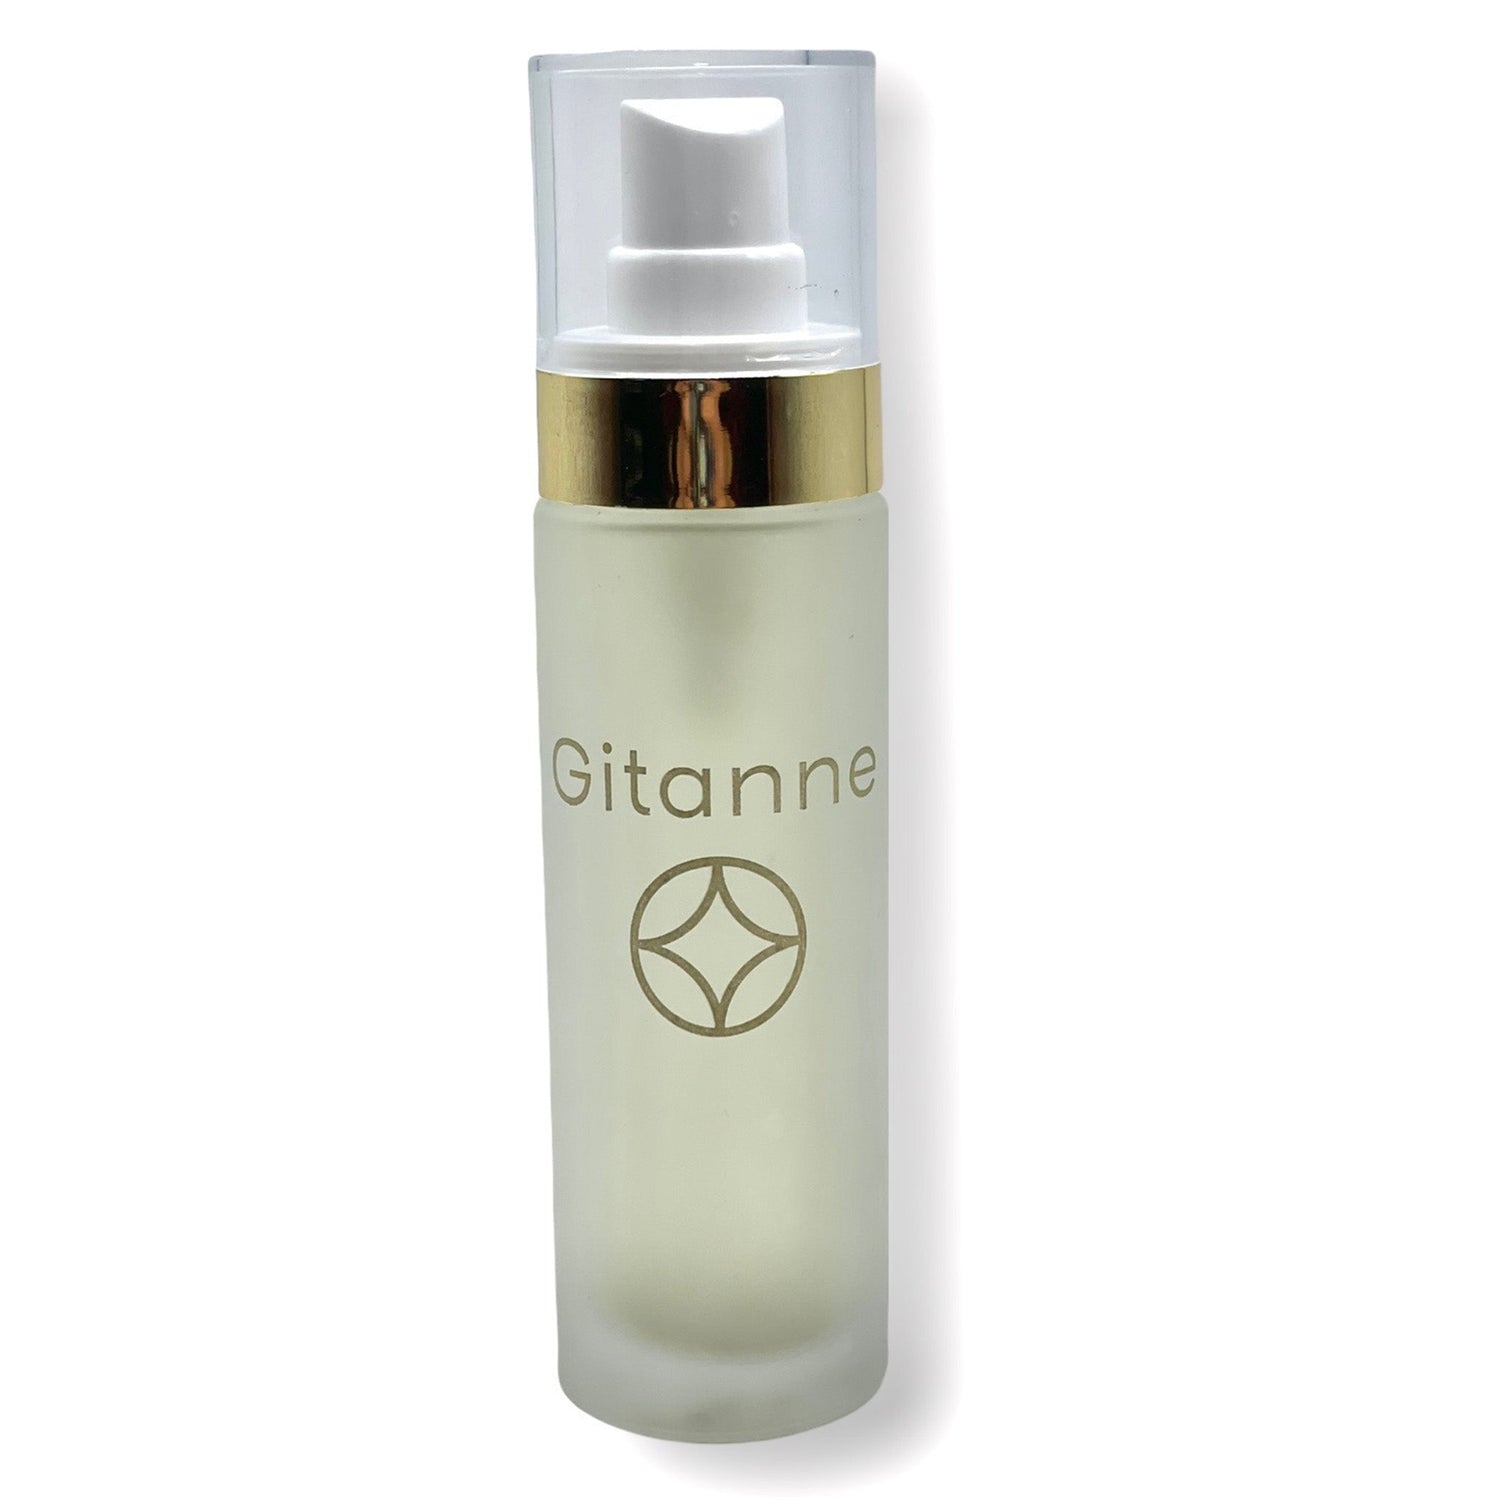 Gitanne Skincare Jade Balancing Face Toner purifies and balances uneven skin tone.